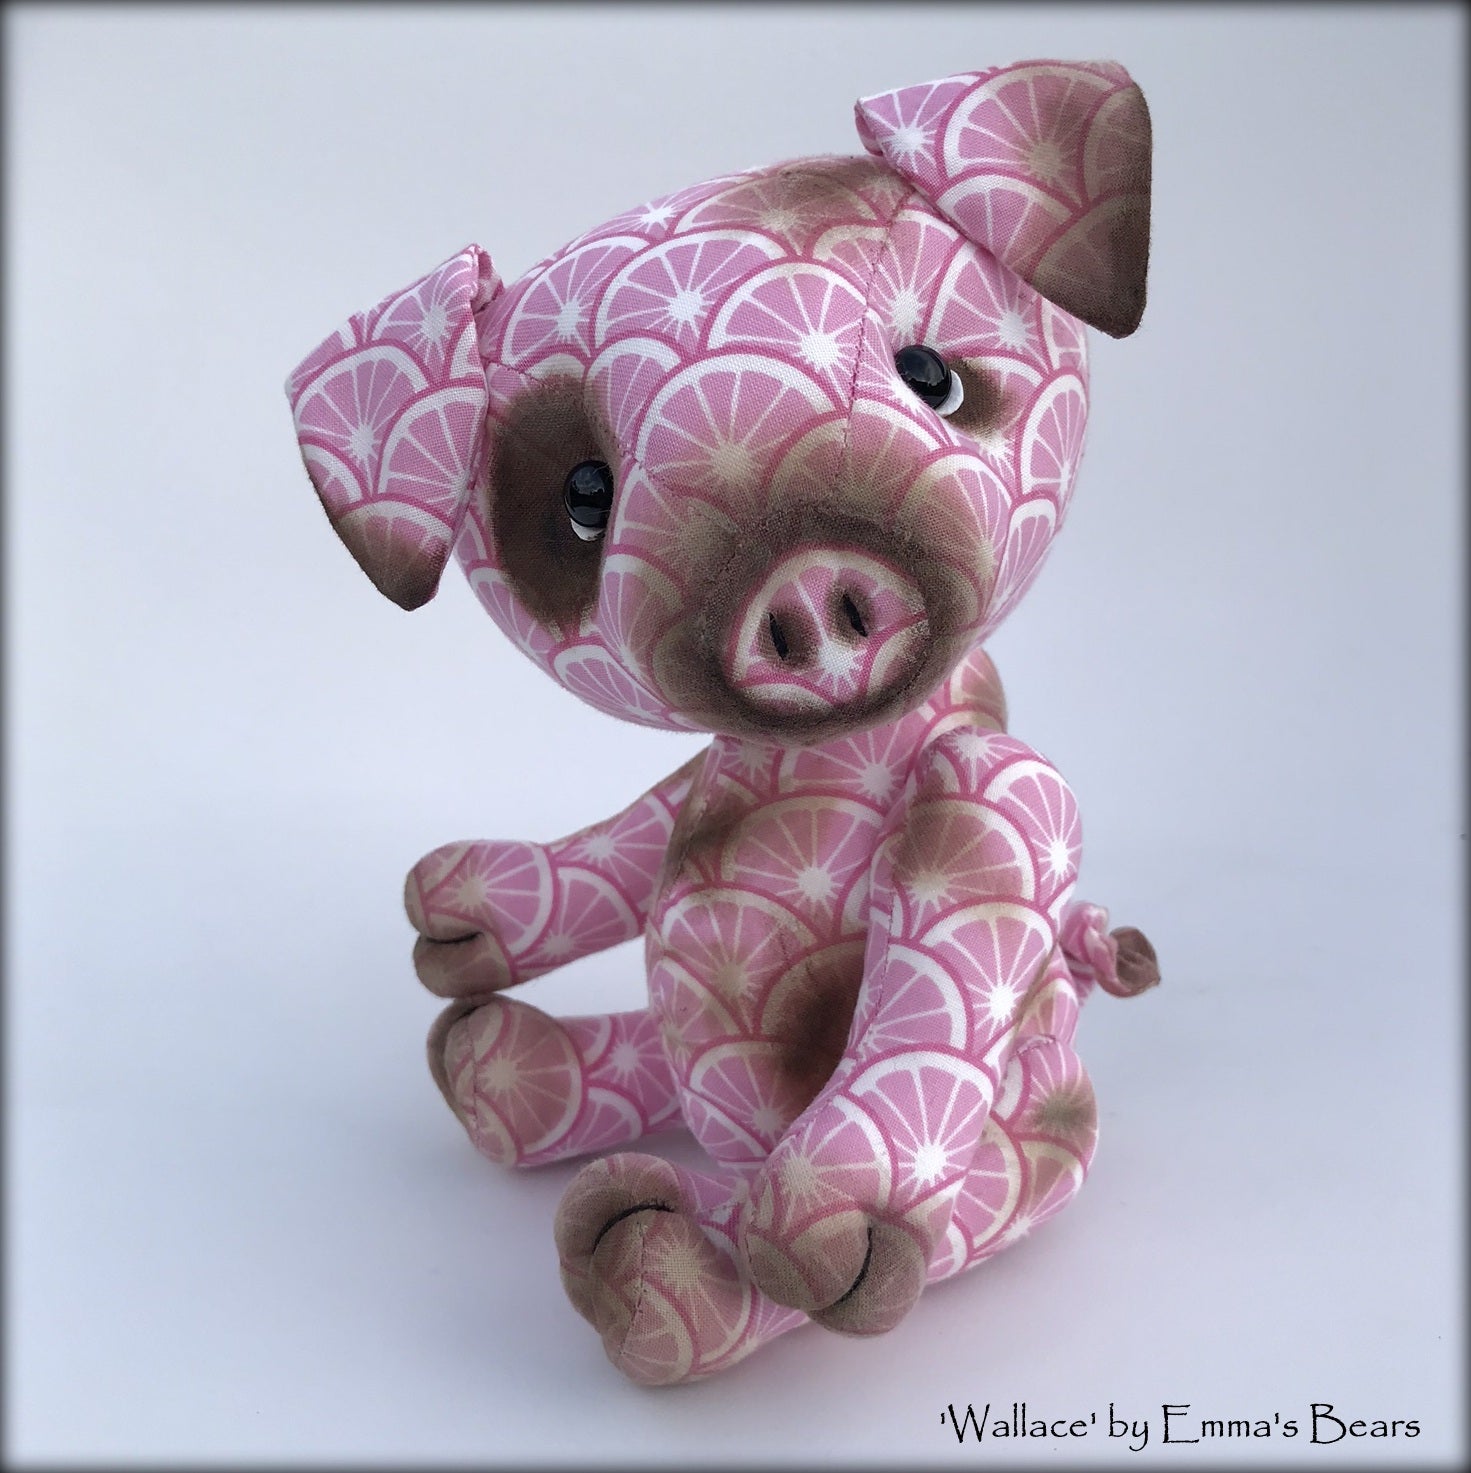 Wallace - 9" COTTON Artist Pig by Emmas Bears - OOAK